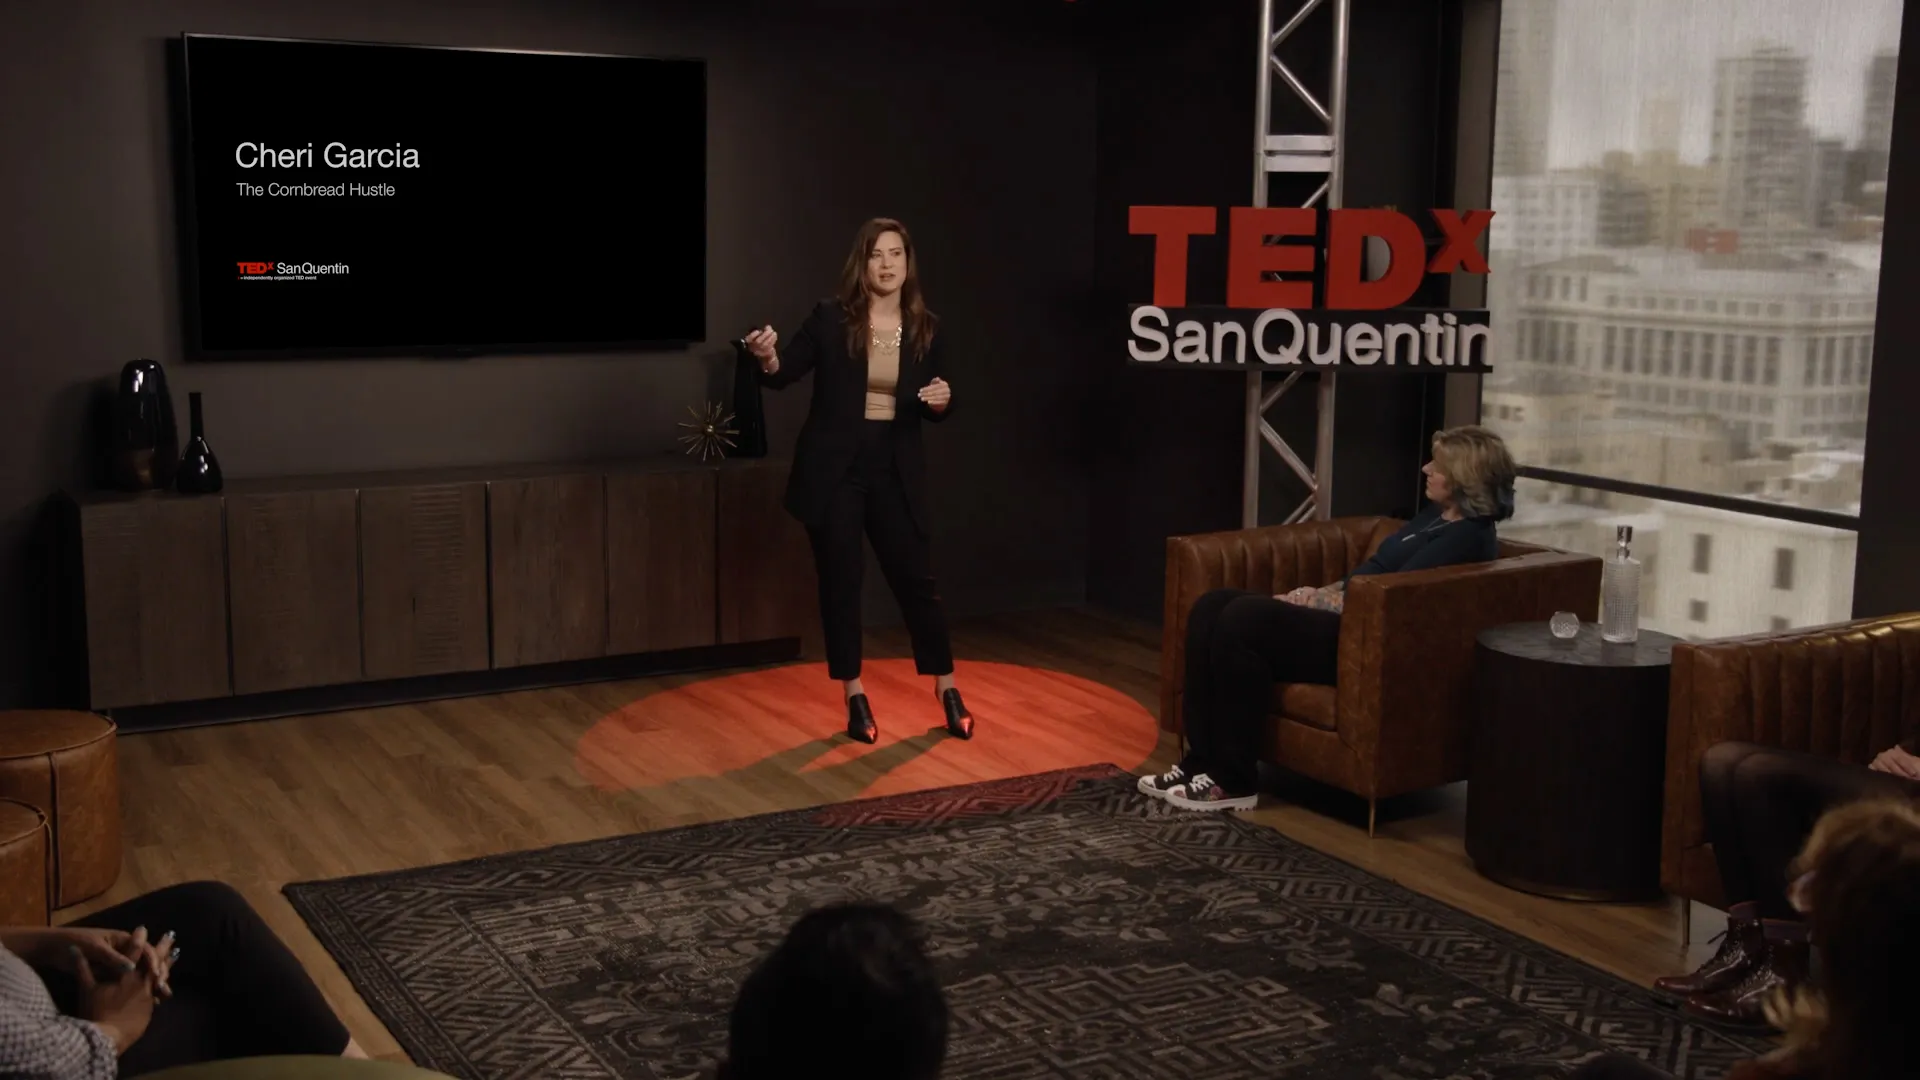 Cornbread Hustle CEO Cheri Garcia presenting a TEDx Talk